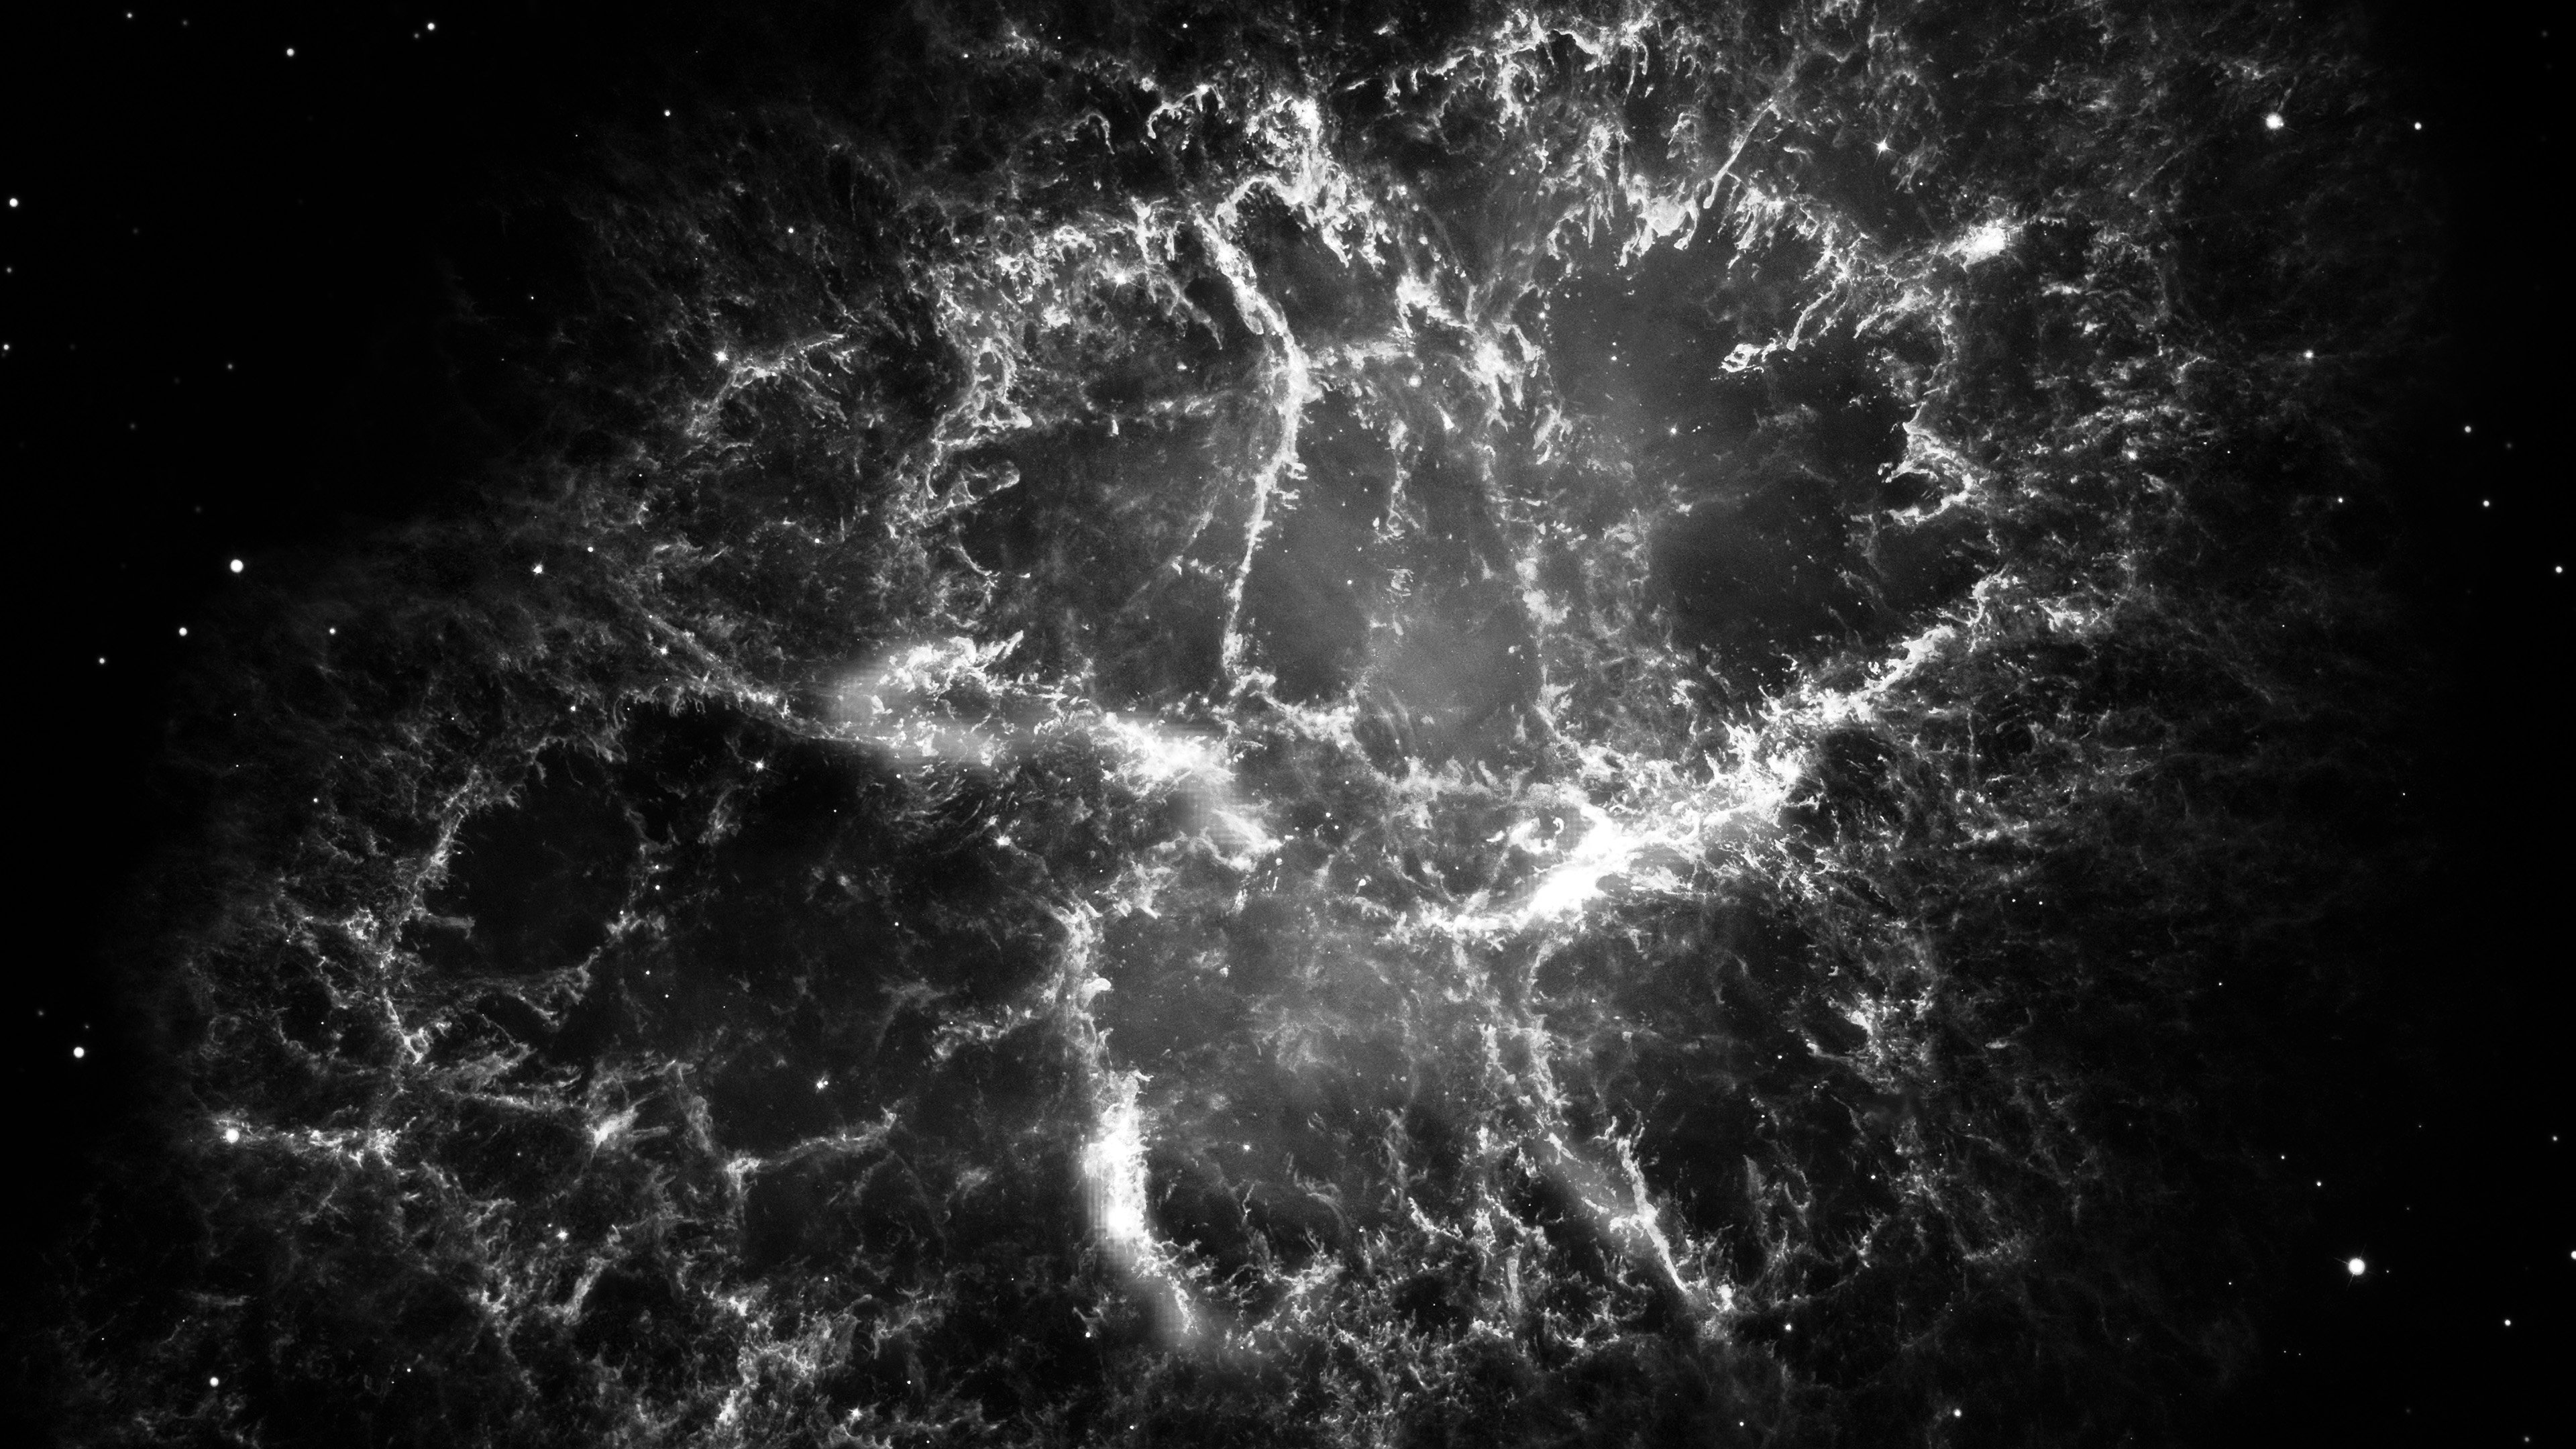 wallpaper for desktop, laptop. space astronomy galaxy dark star black